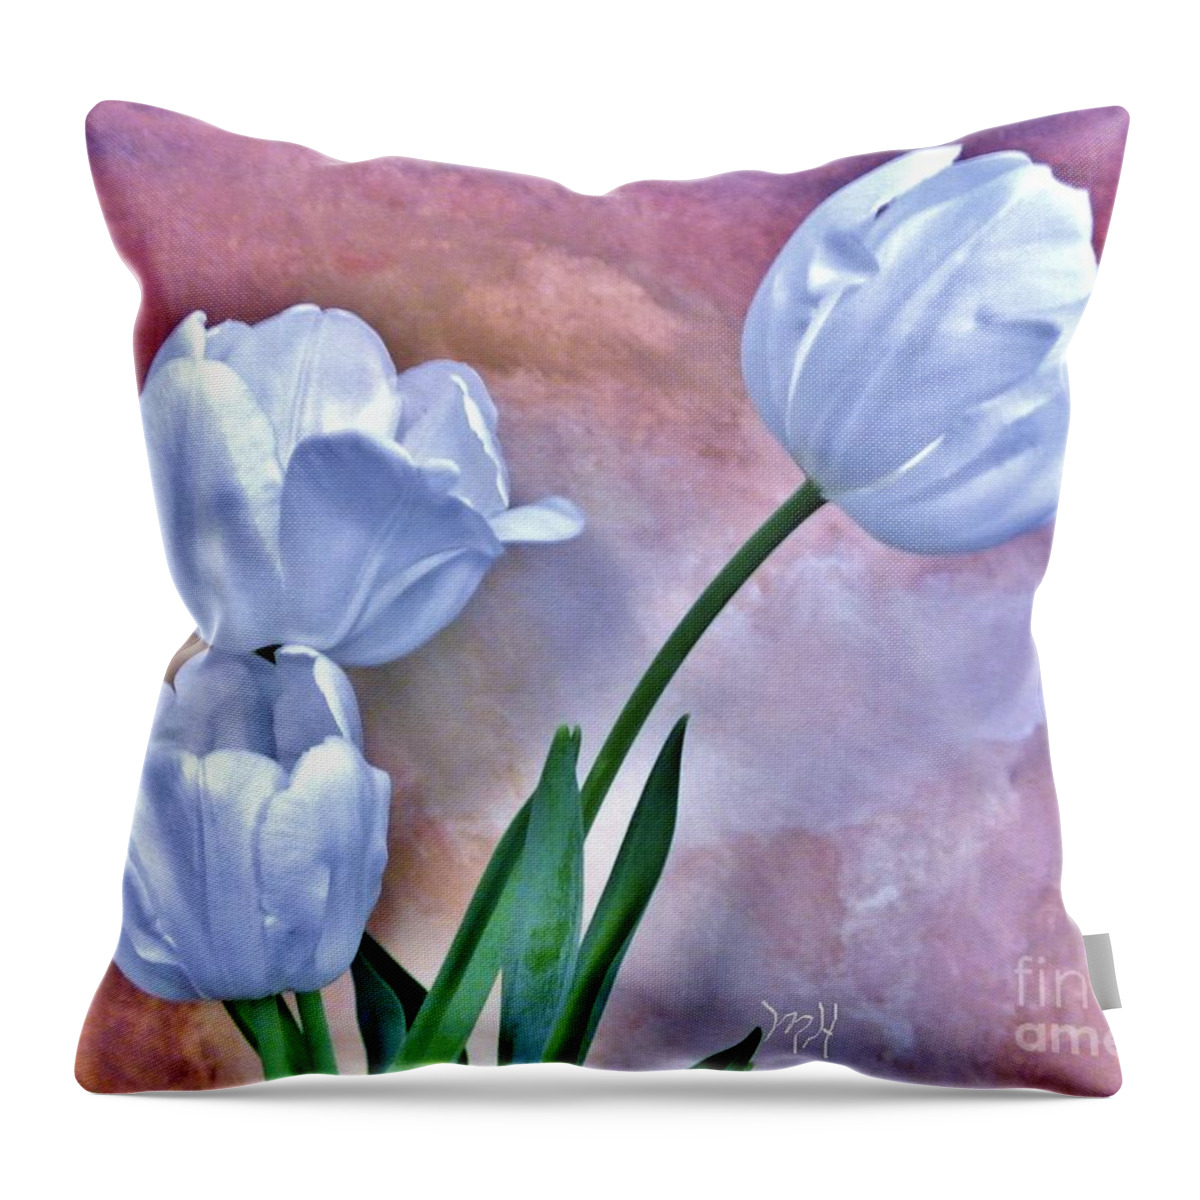 Photo Throw Pillow featuring the photograph Three White Tulips by Marsha Heiken